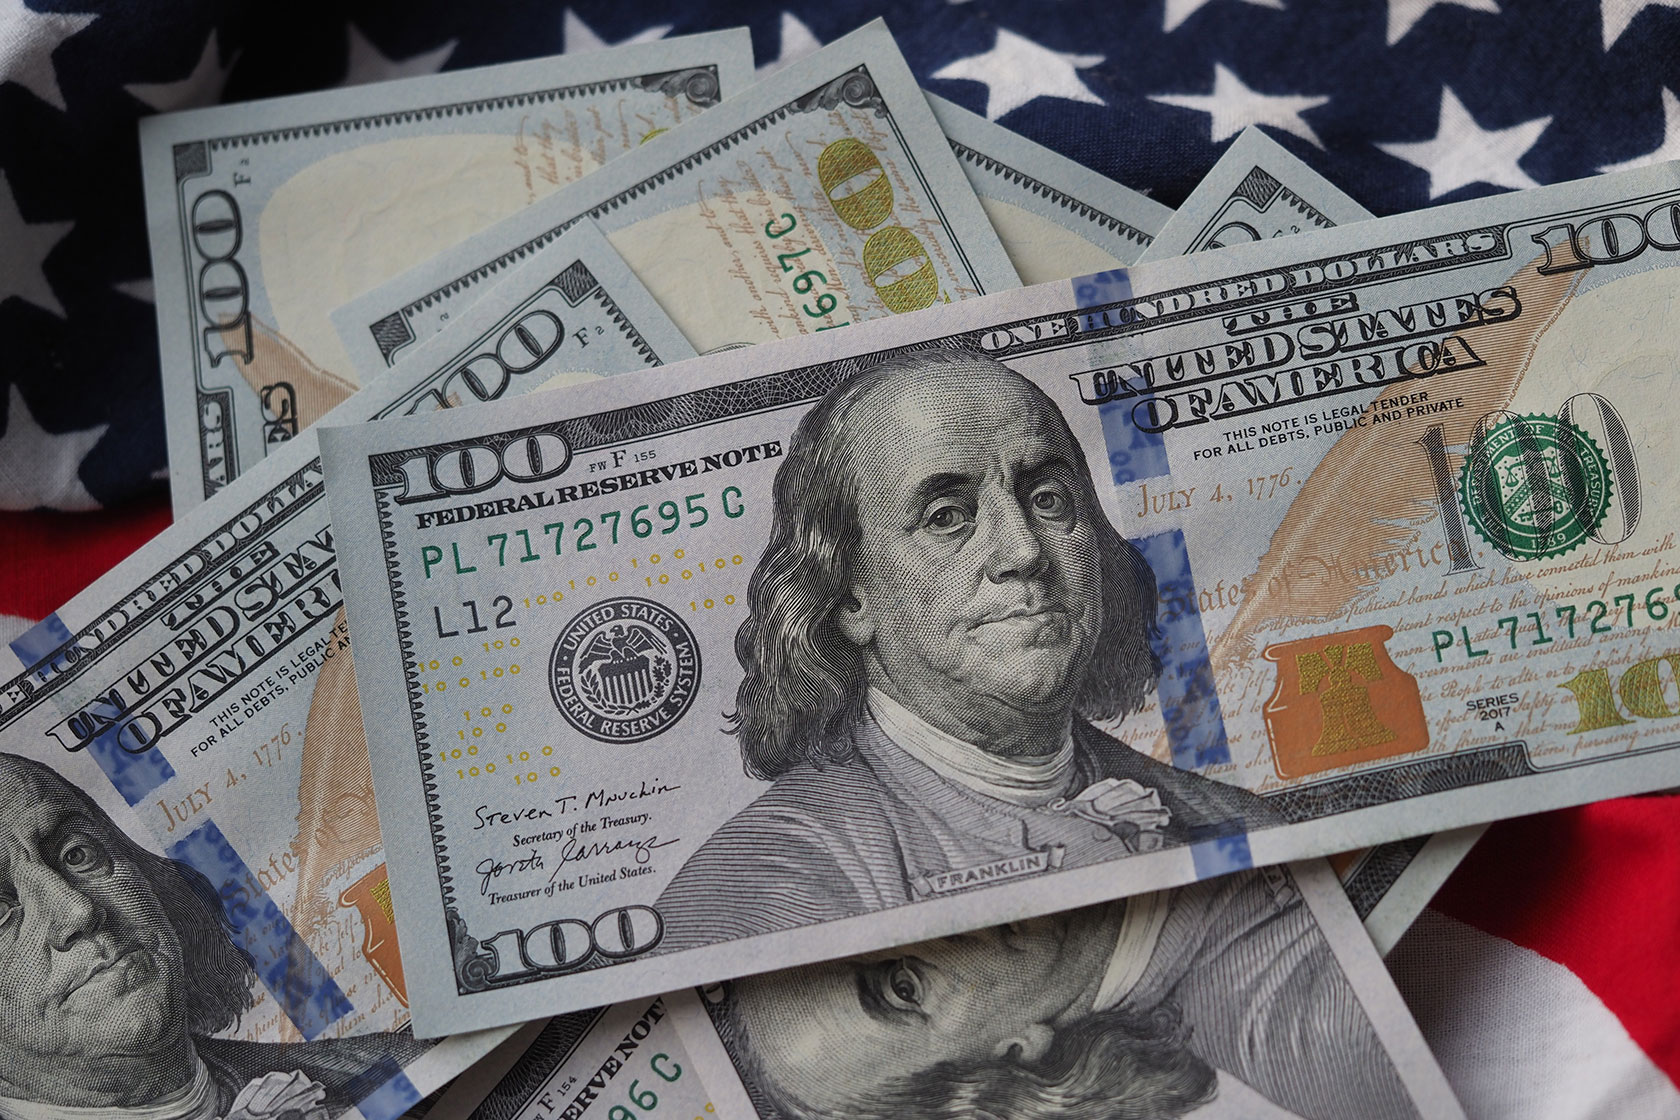 U.S. $100 bills are seen on an American flag.